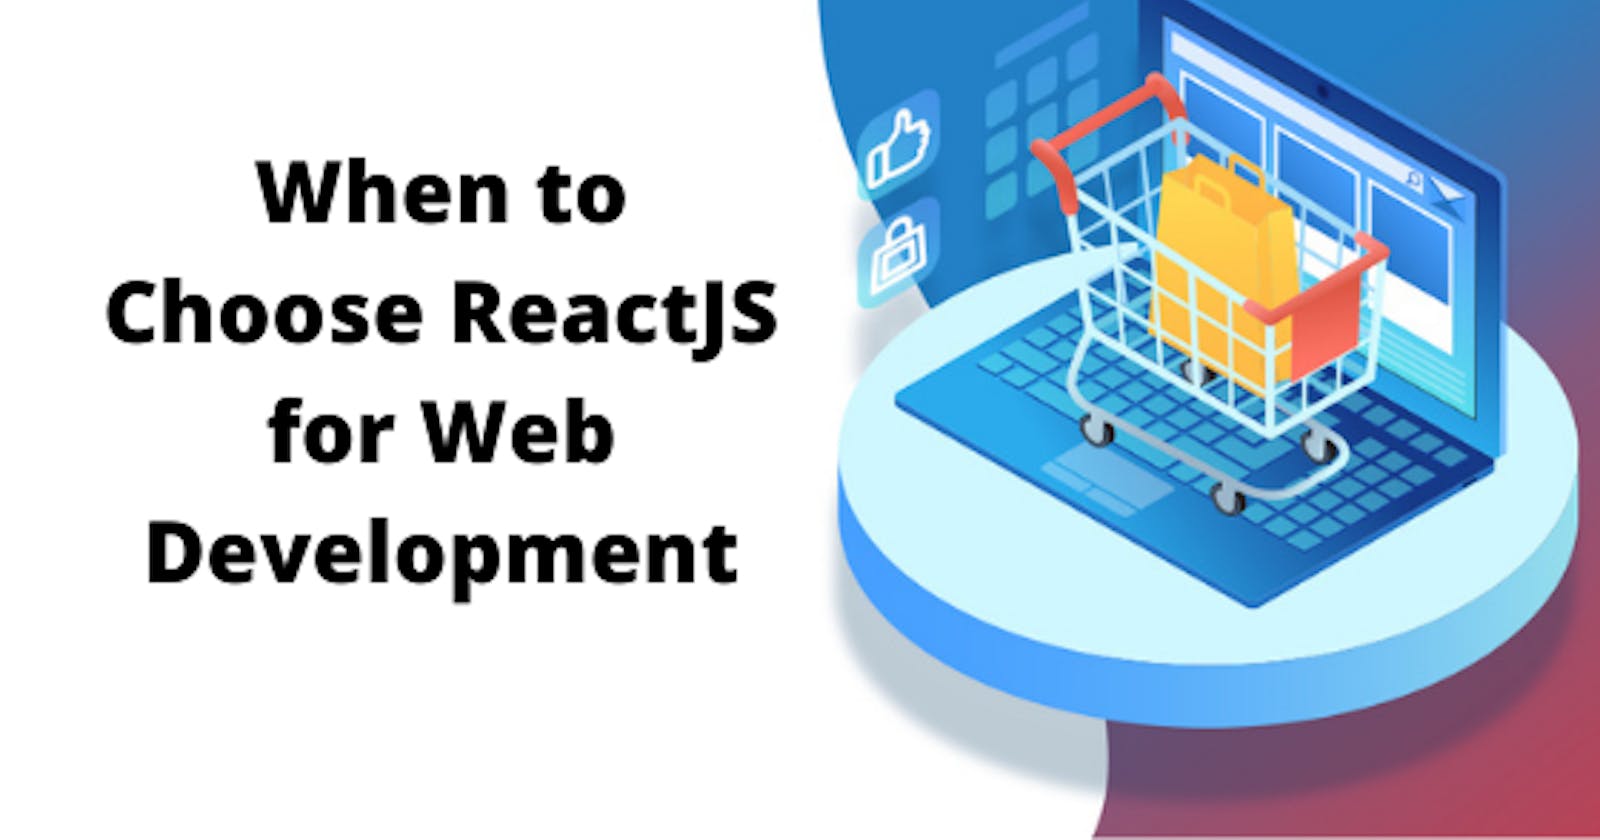 When to Choose ReactJS for Web Development